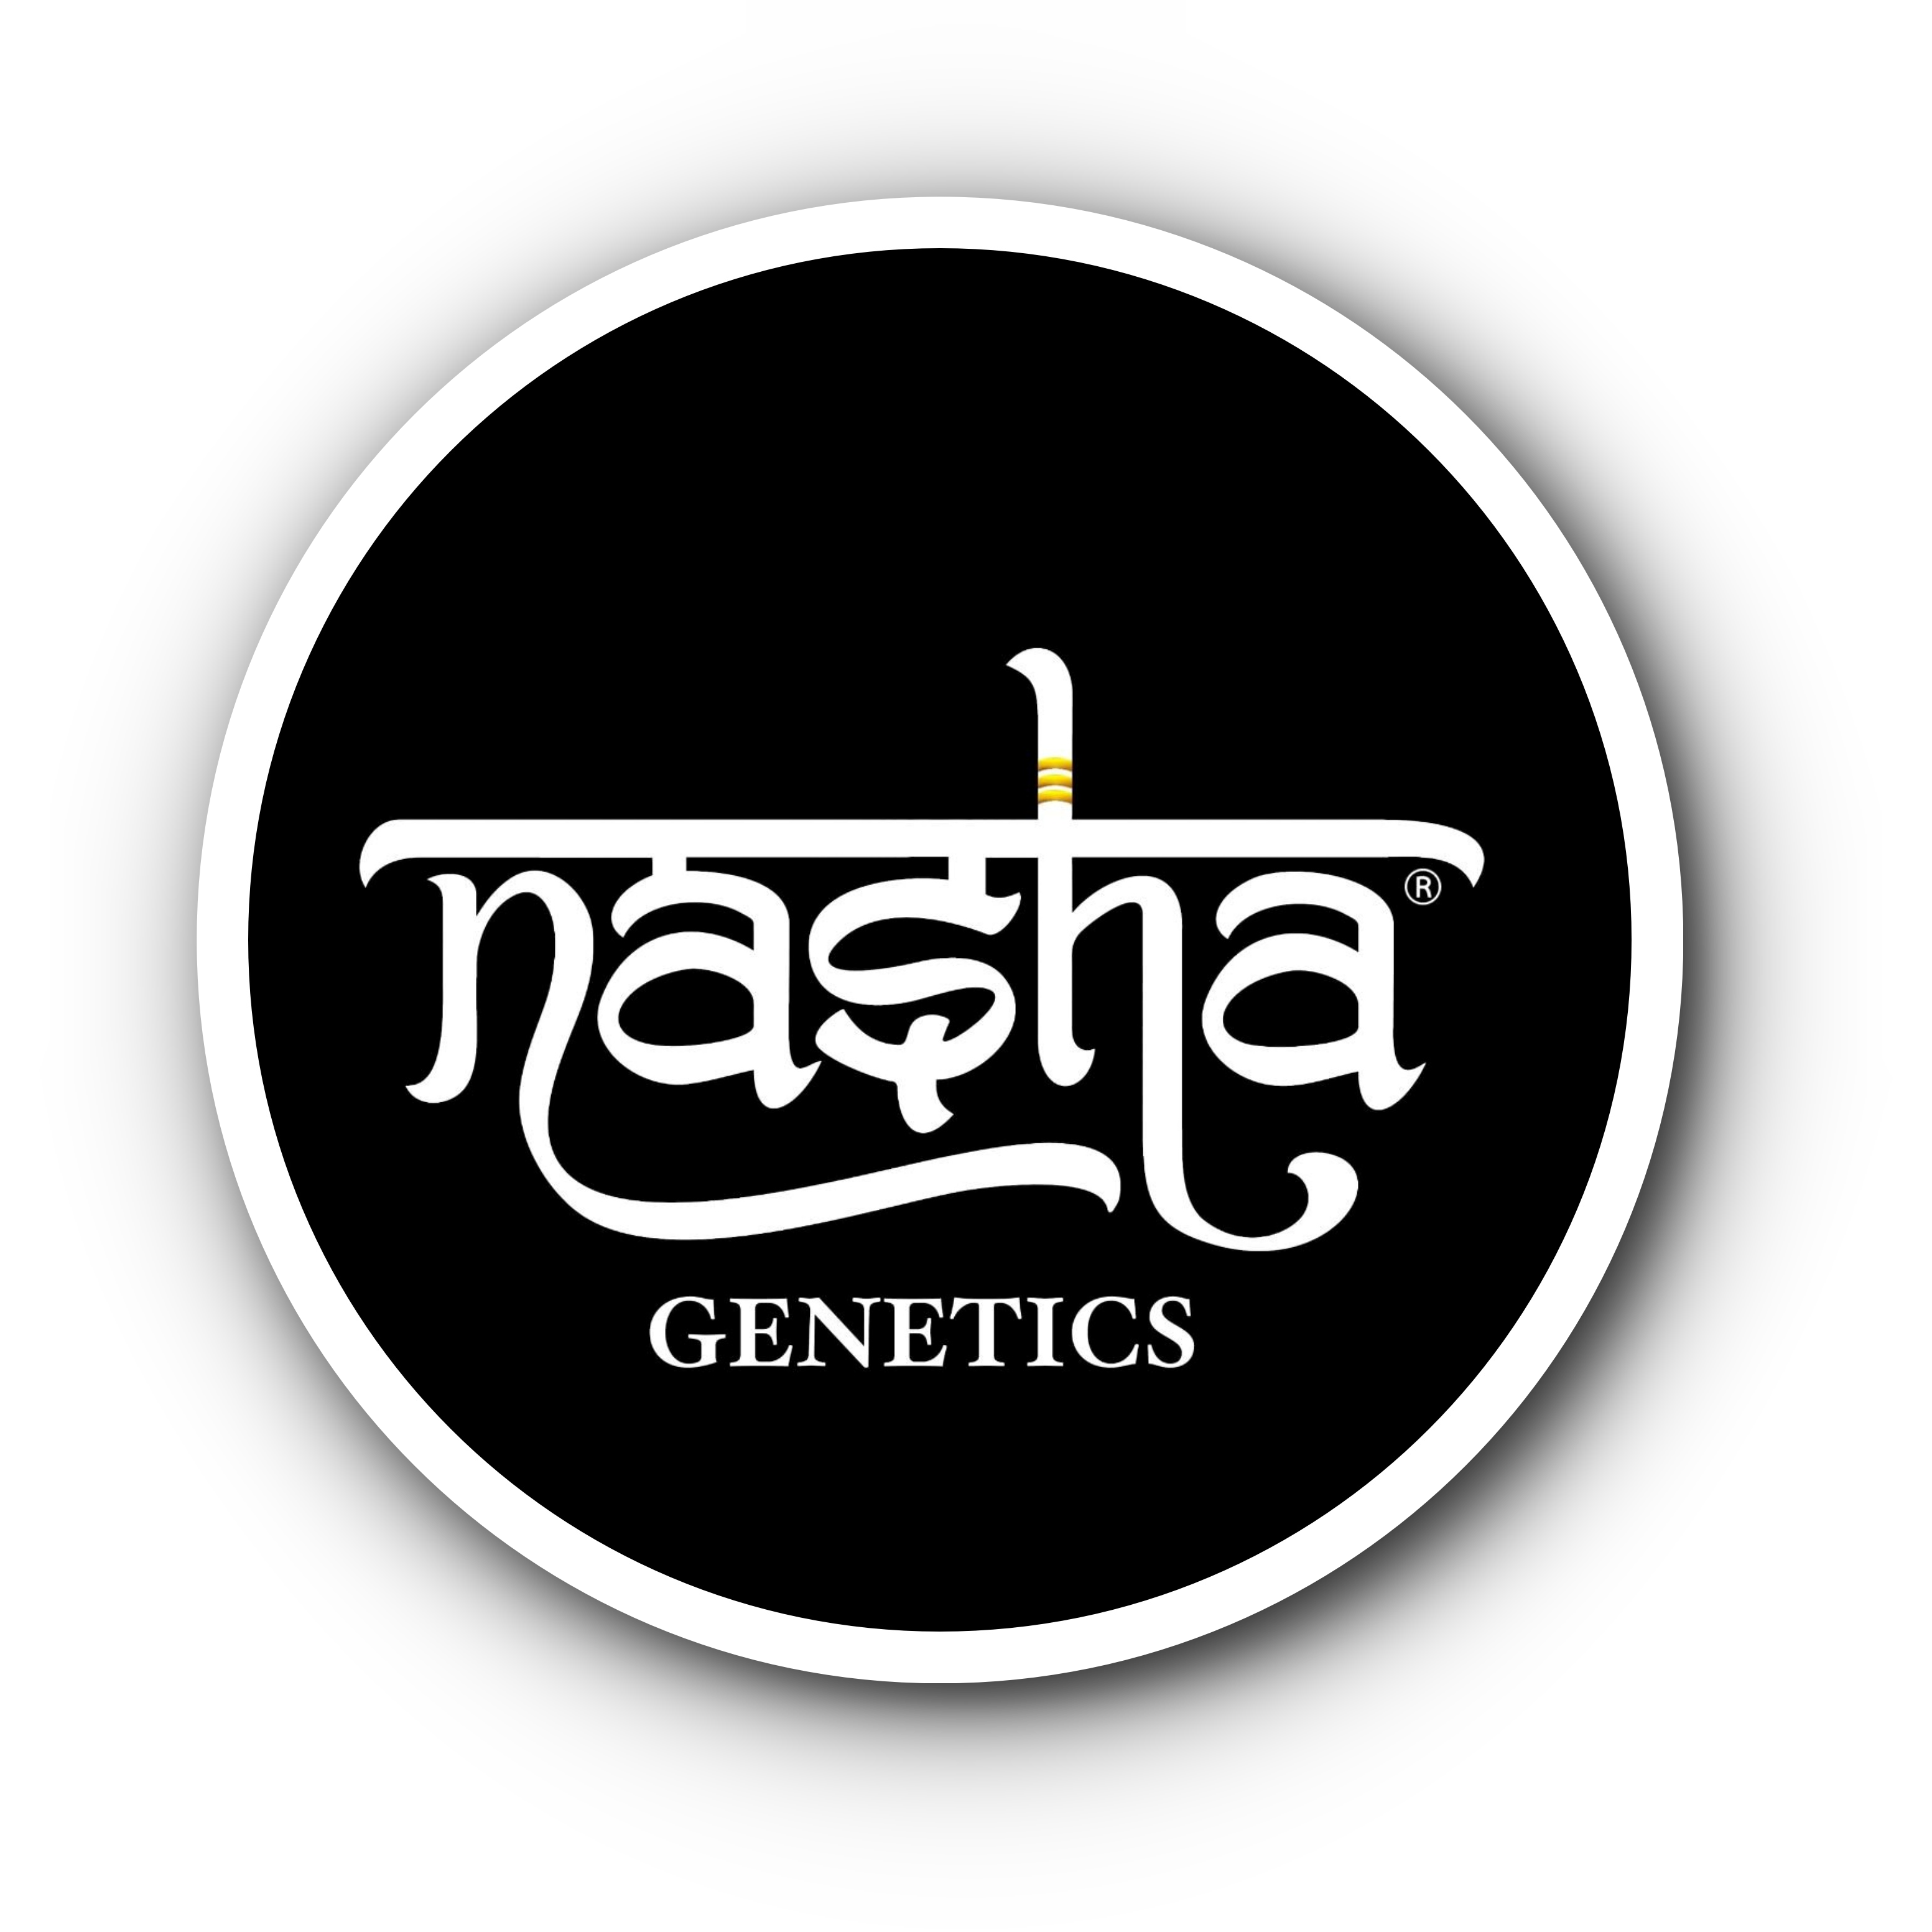 Nasha Genetics, balance between tradition and technology